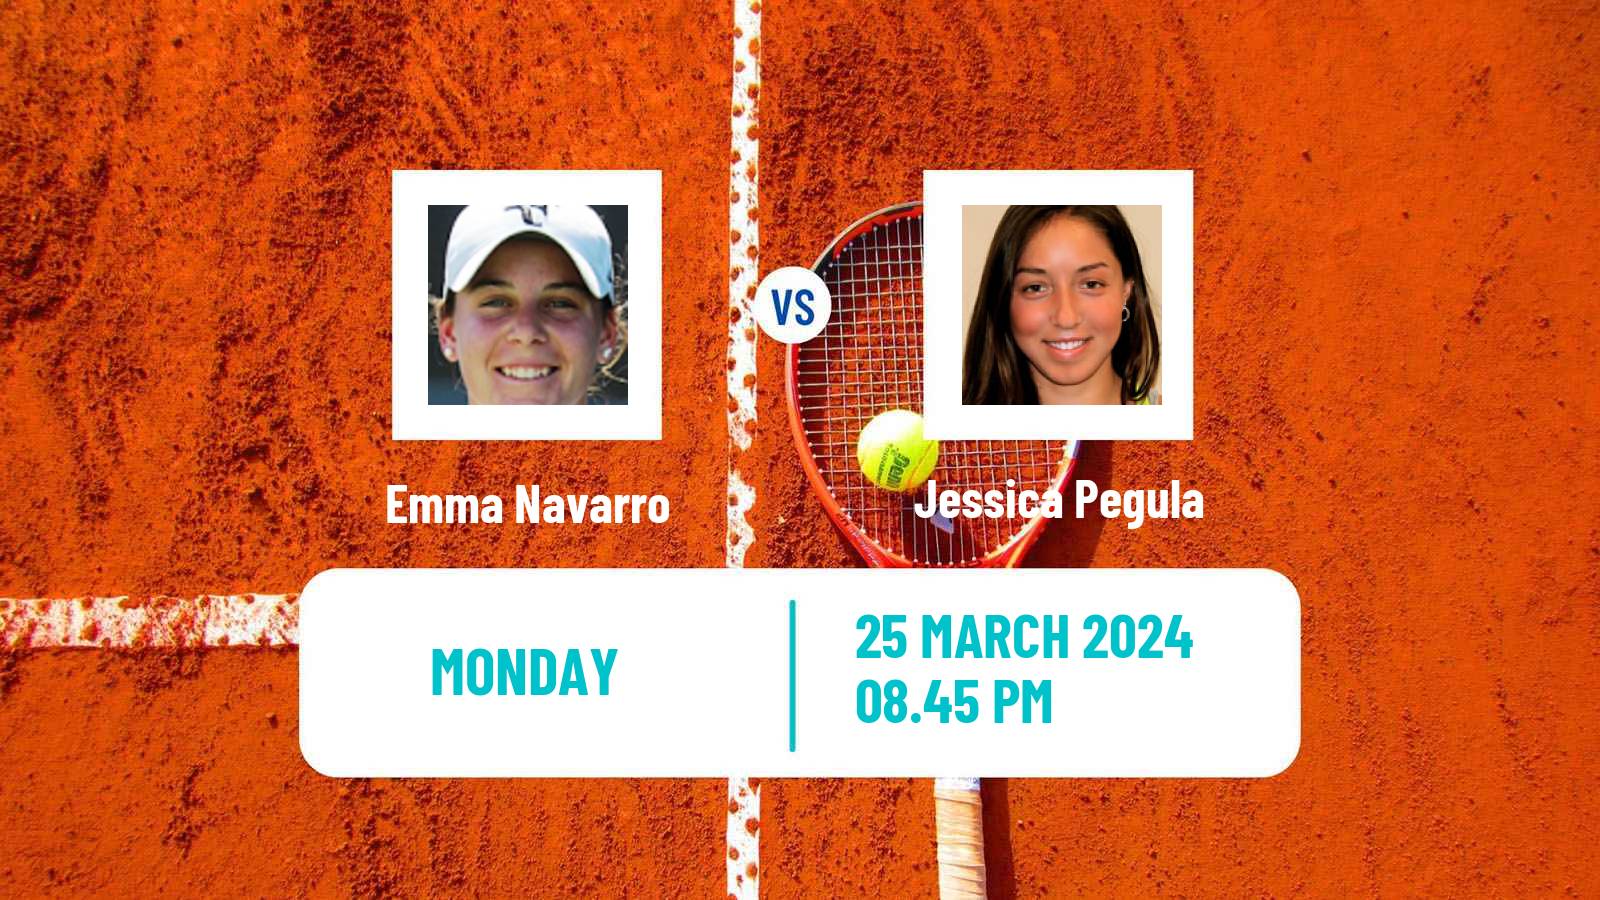 Tennis WTA Miami Emma Navarro - Jessica Pegula